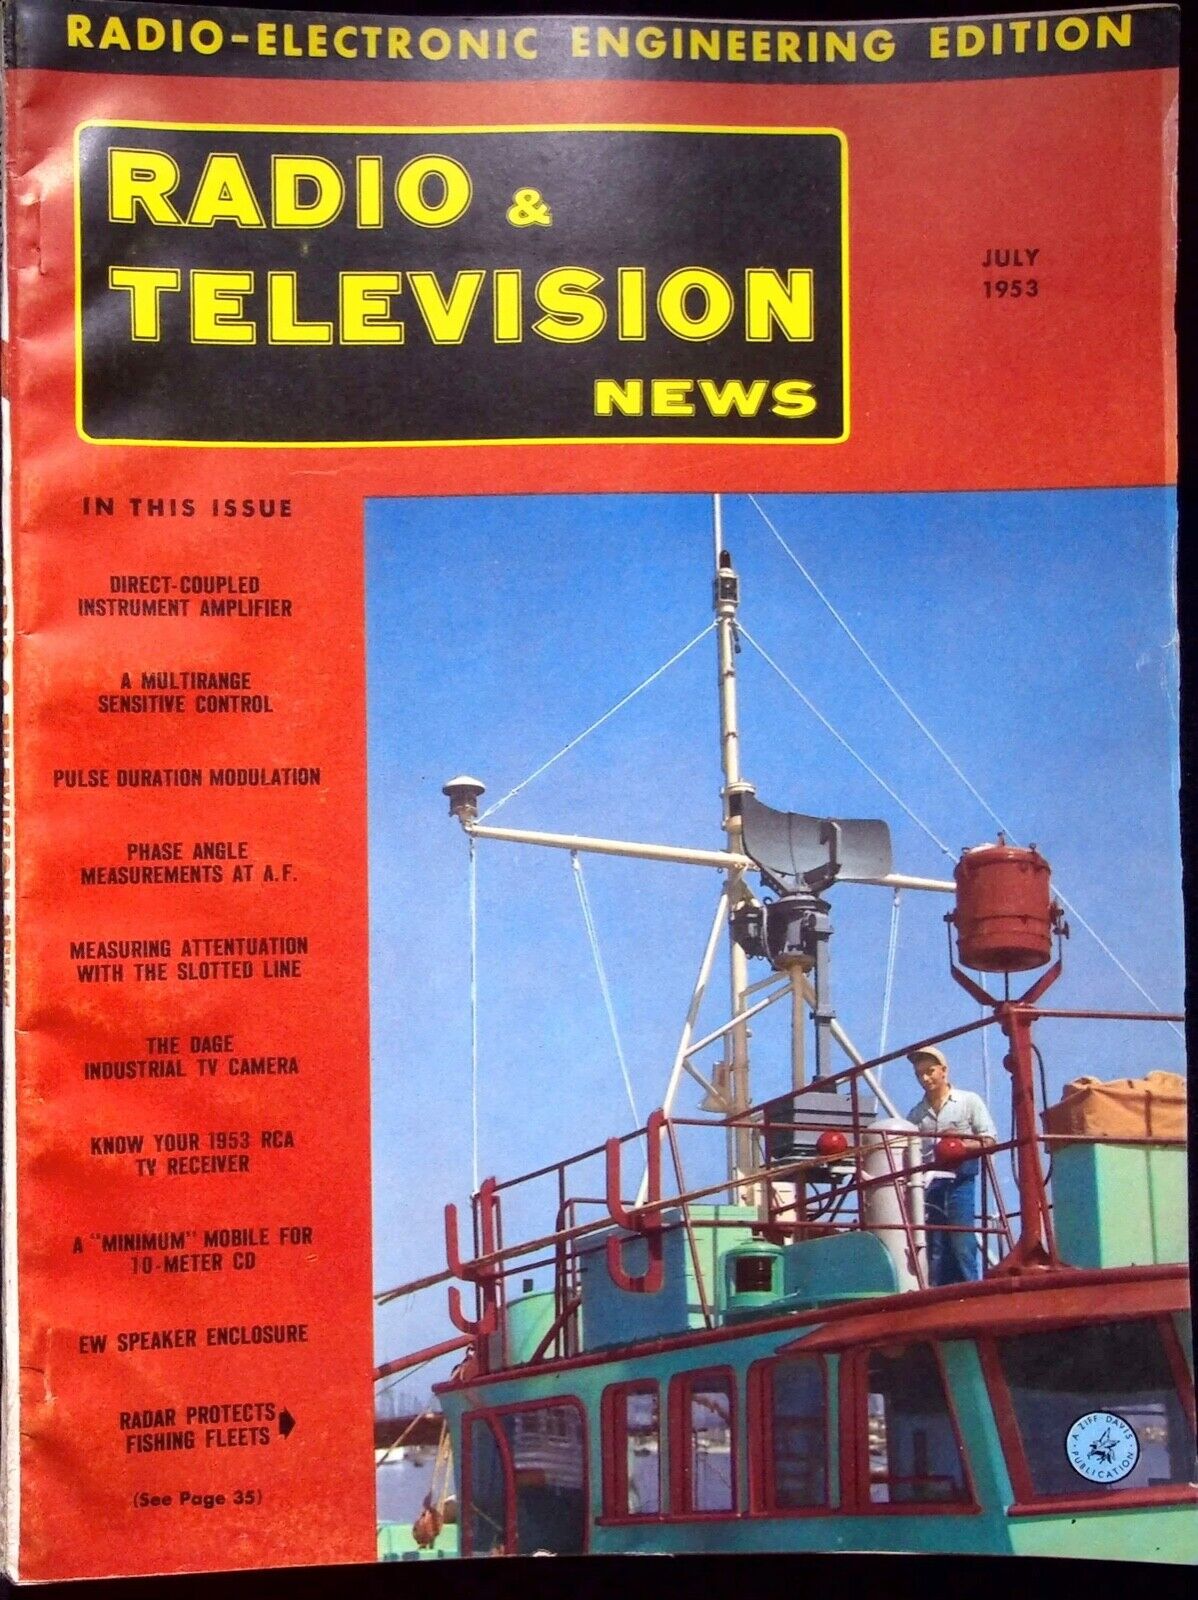 RADAR INSTALLATION FISHING BOAT - RADIO & TELEVISION NEWS MAGAZINE, JULY 1953 